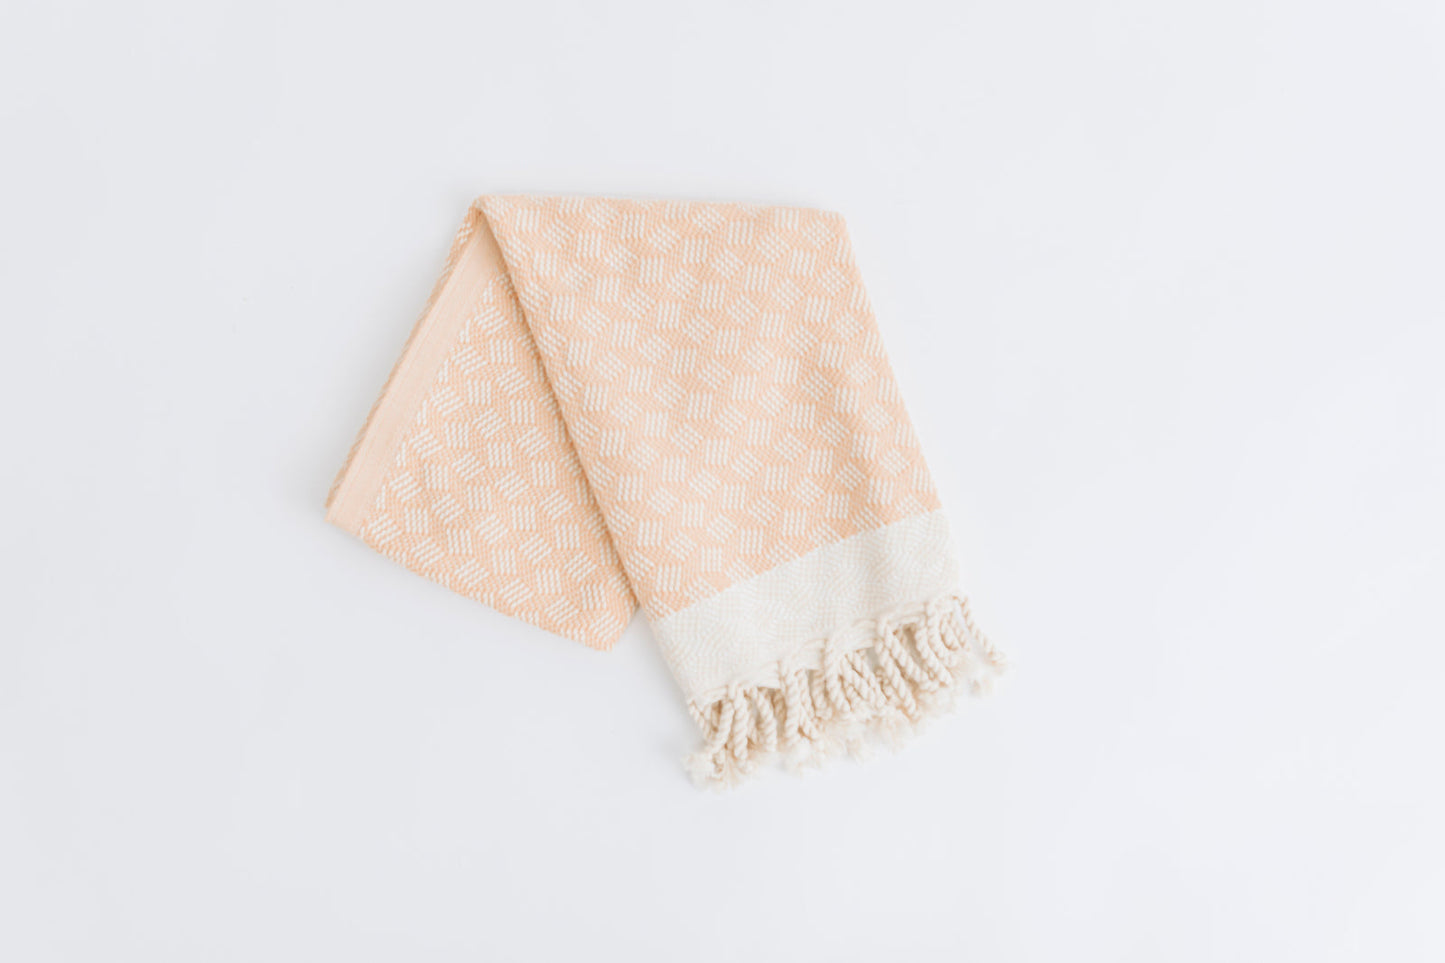 Peskir (Hand Towel) - Lokum (Squares)